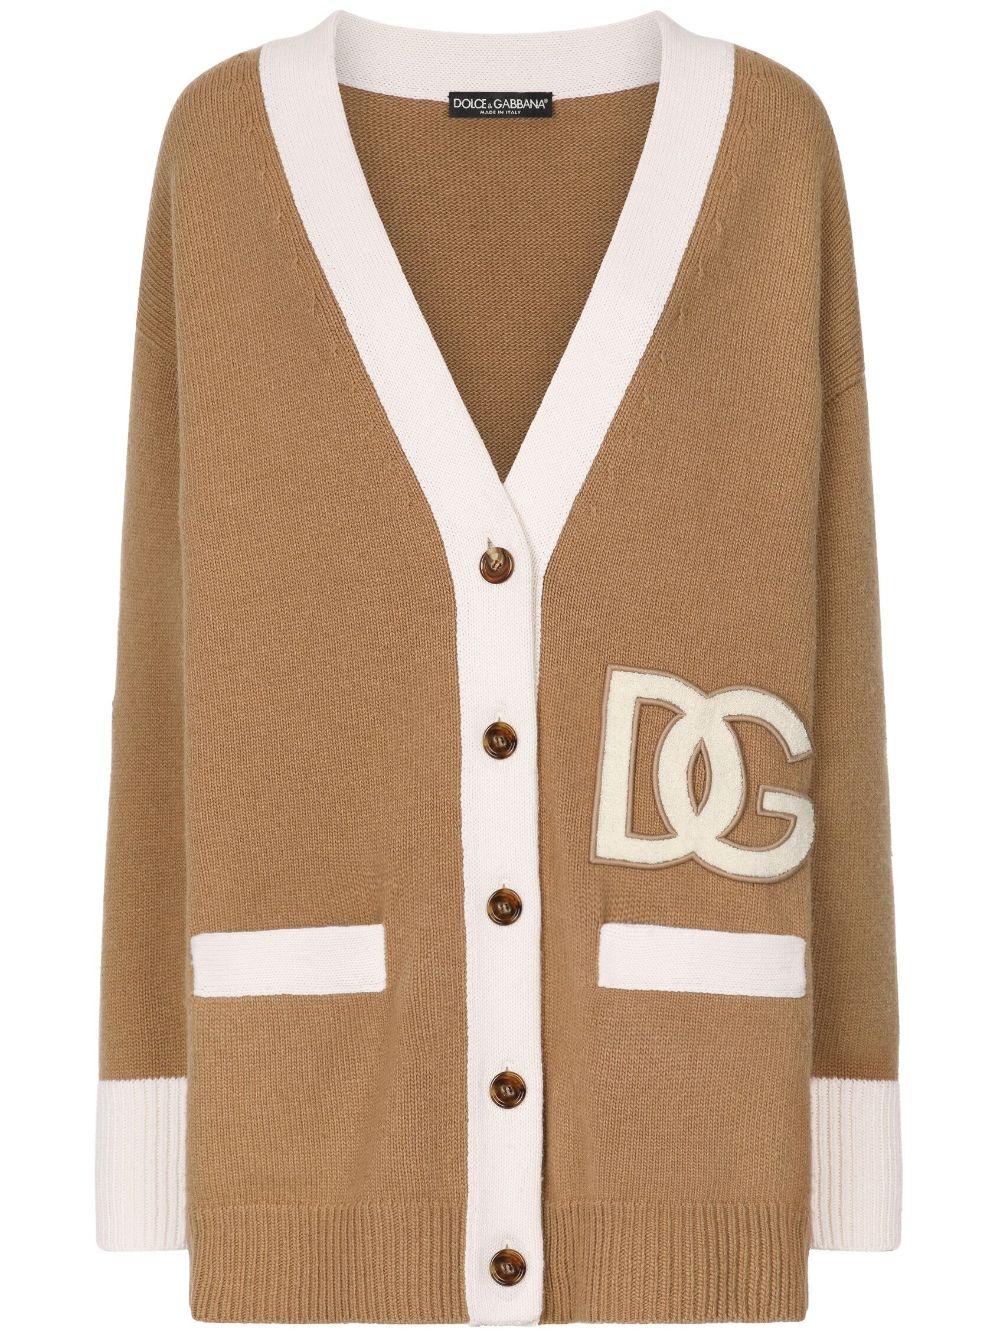 Dolce & Gabbana Logo Wool Cardigan in Natural | Lyst